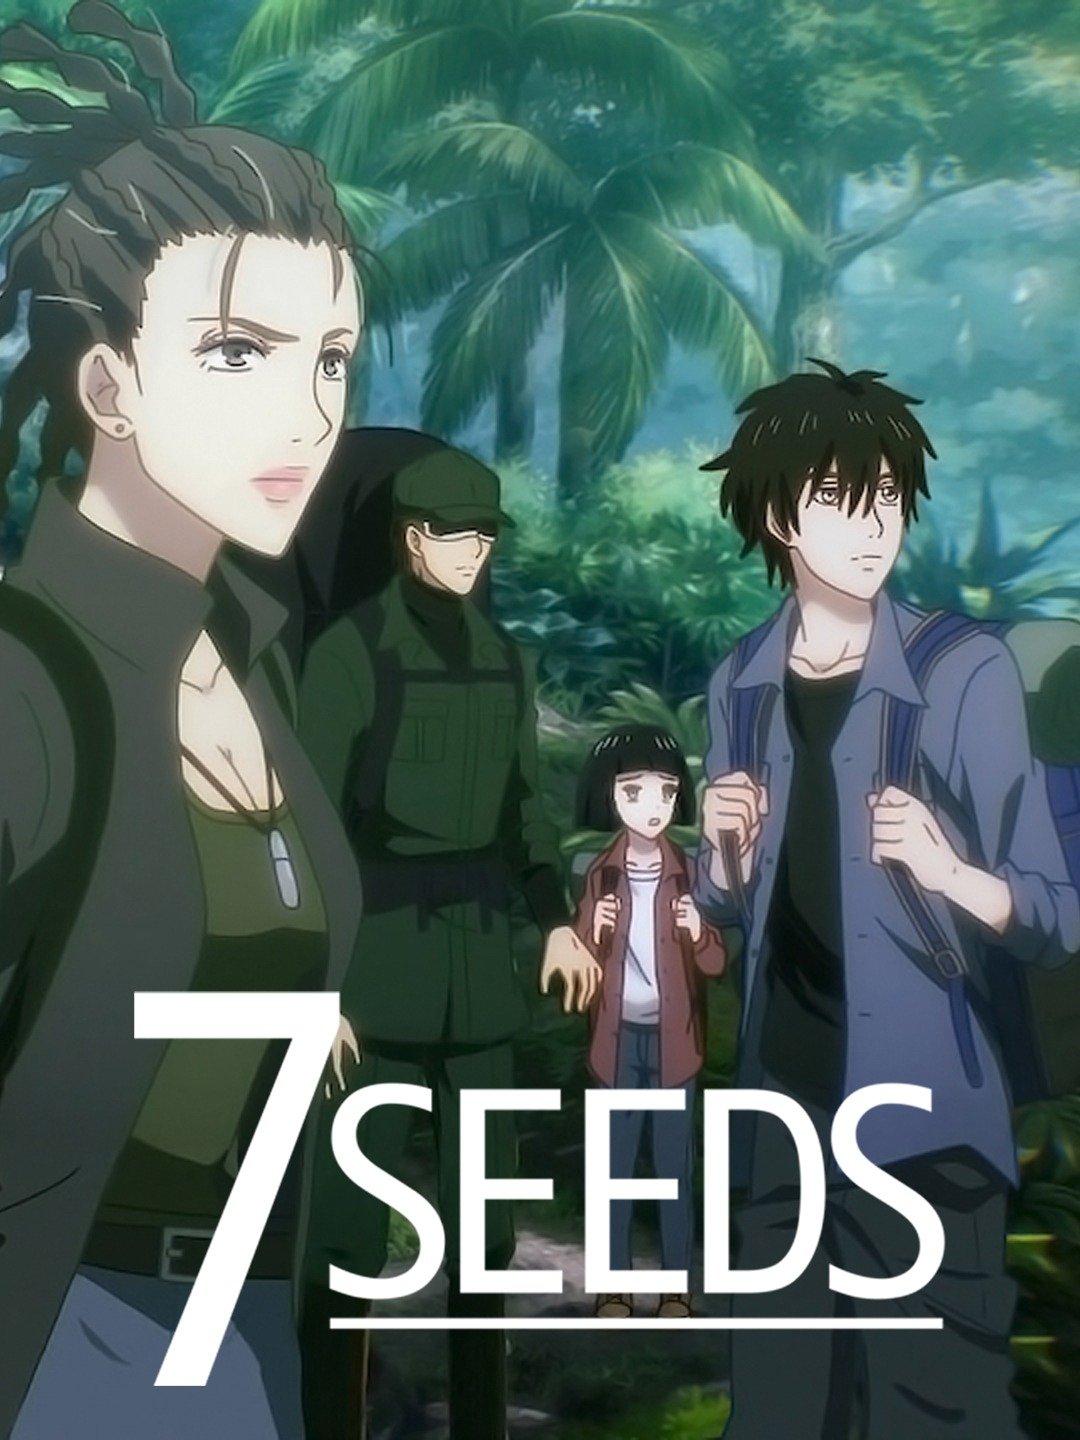 7 Seeds manga Behind the hit Netflix anime series